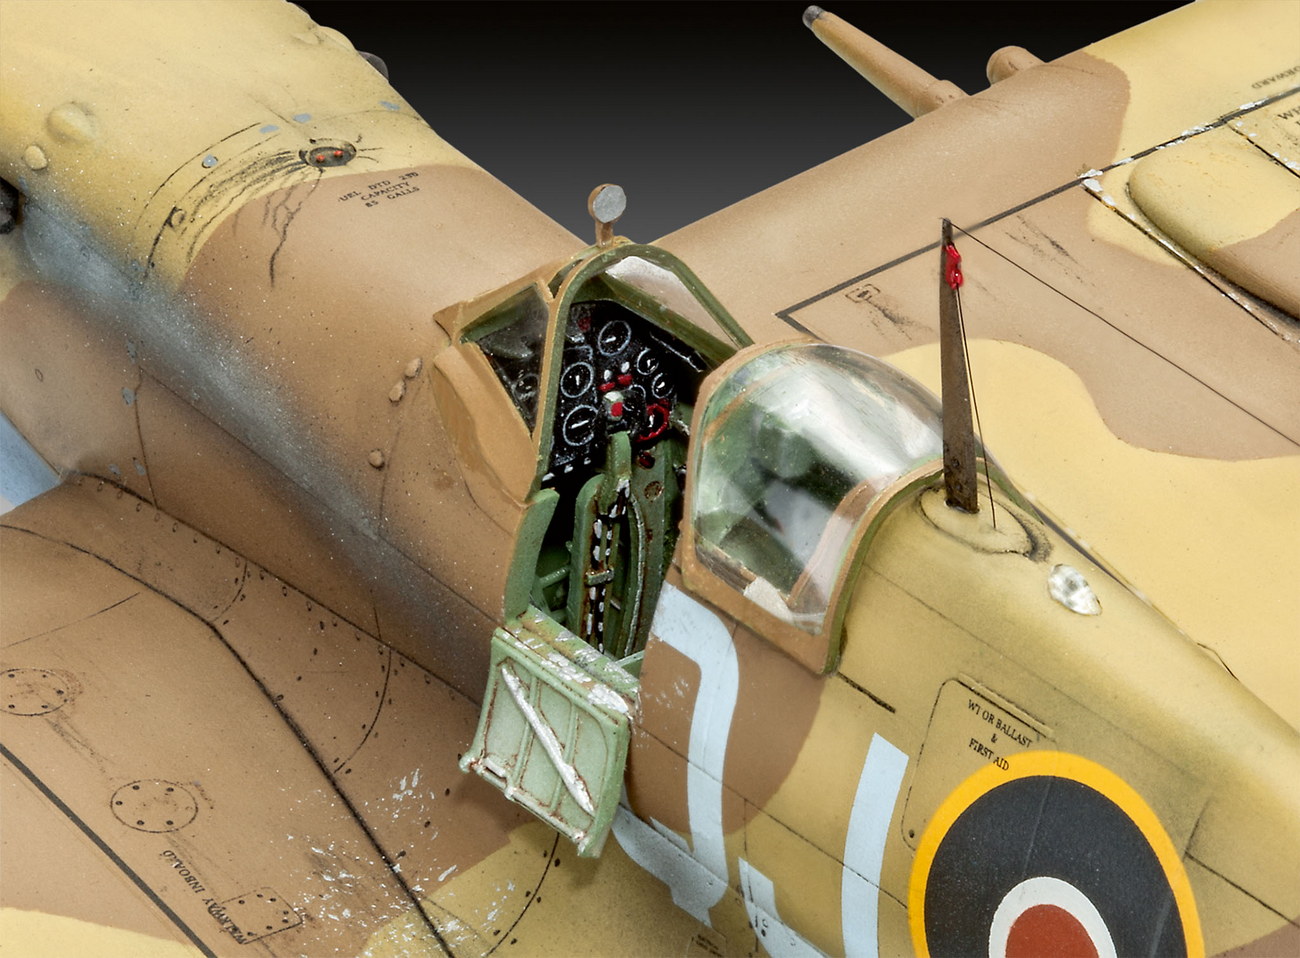 Revell 03940 - Supermarine Spitfire Mk.Vc